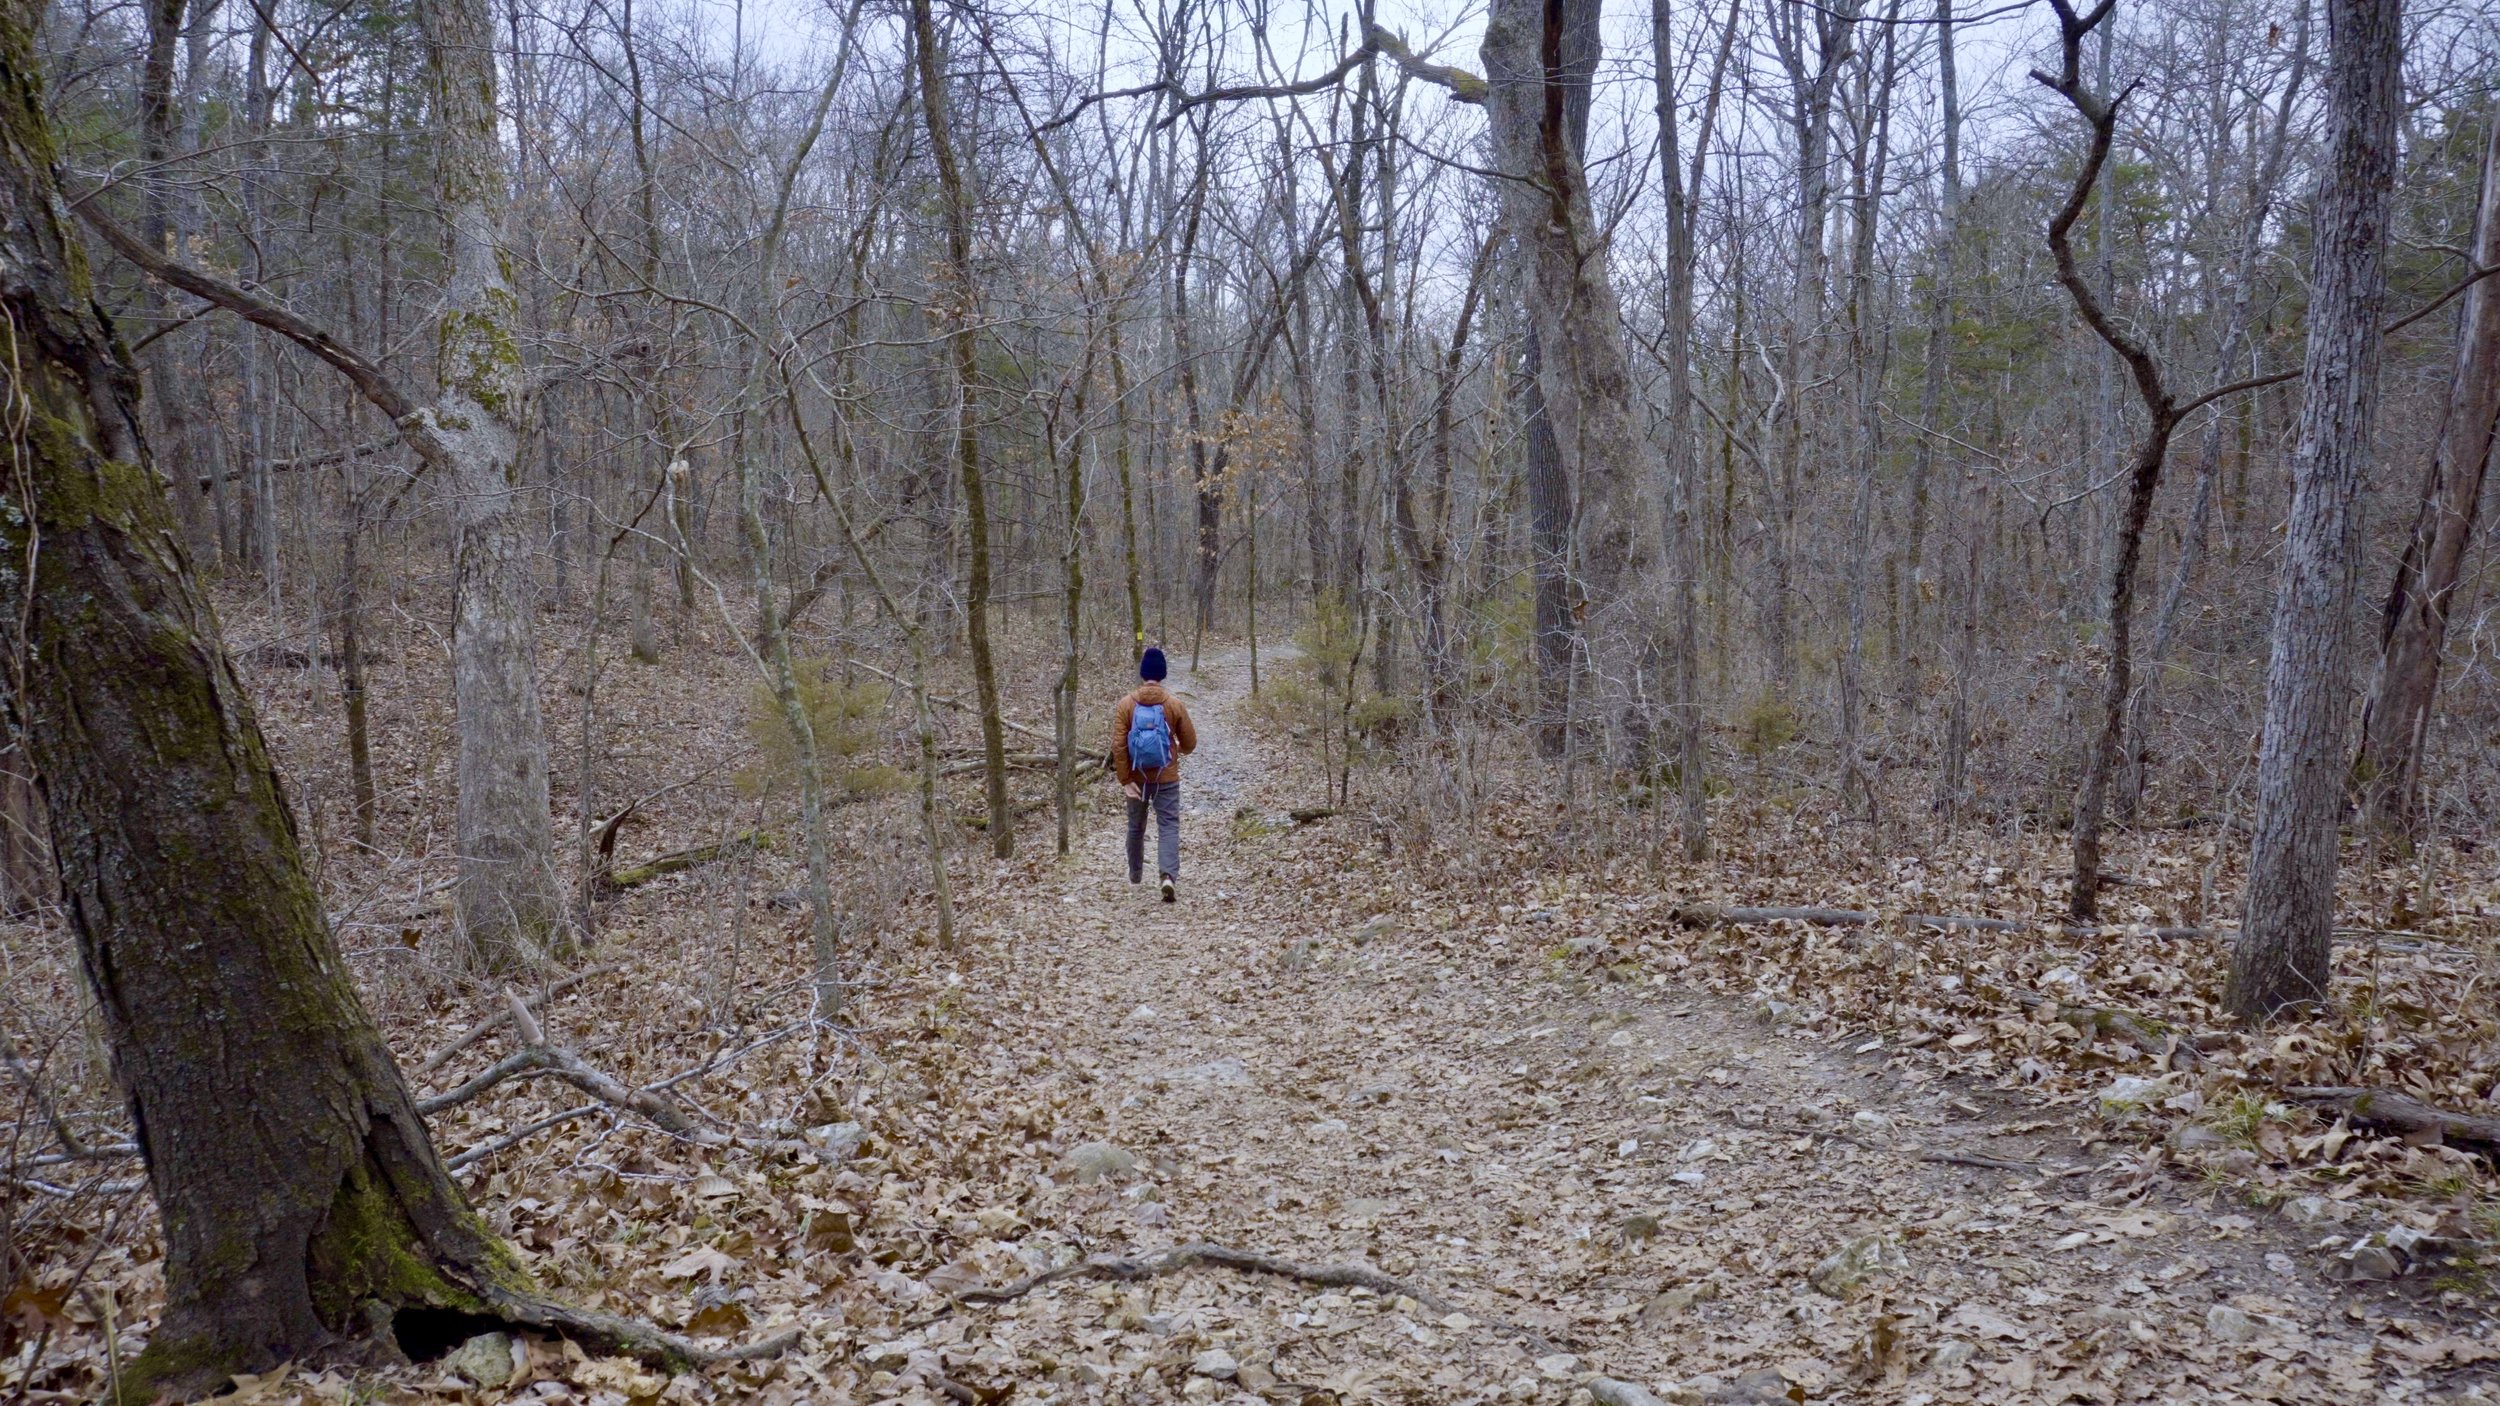 Starting Deer Run Trail